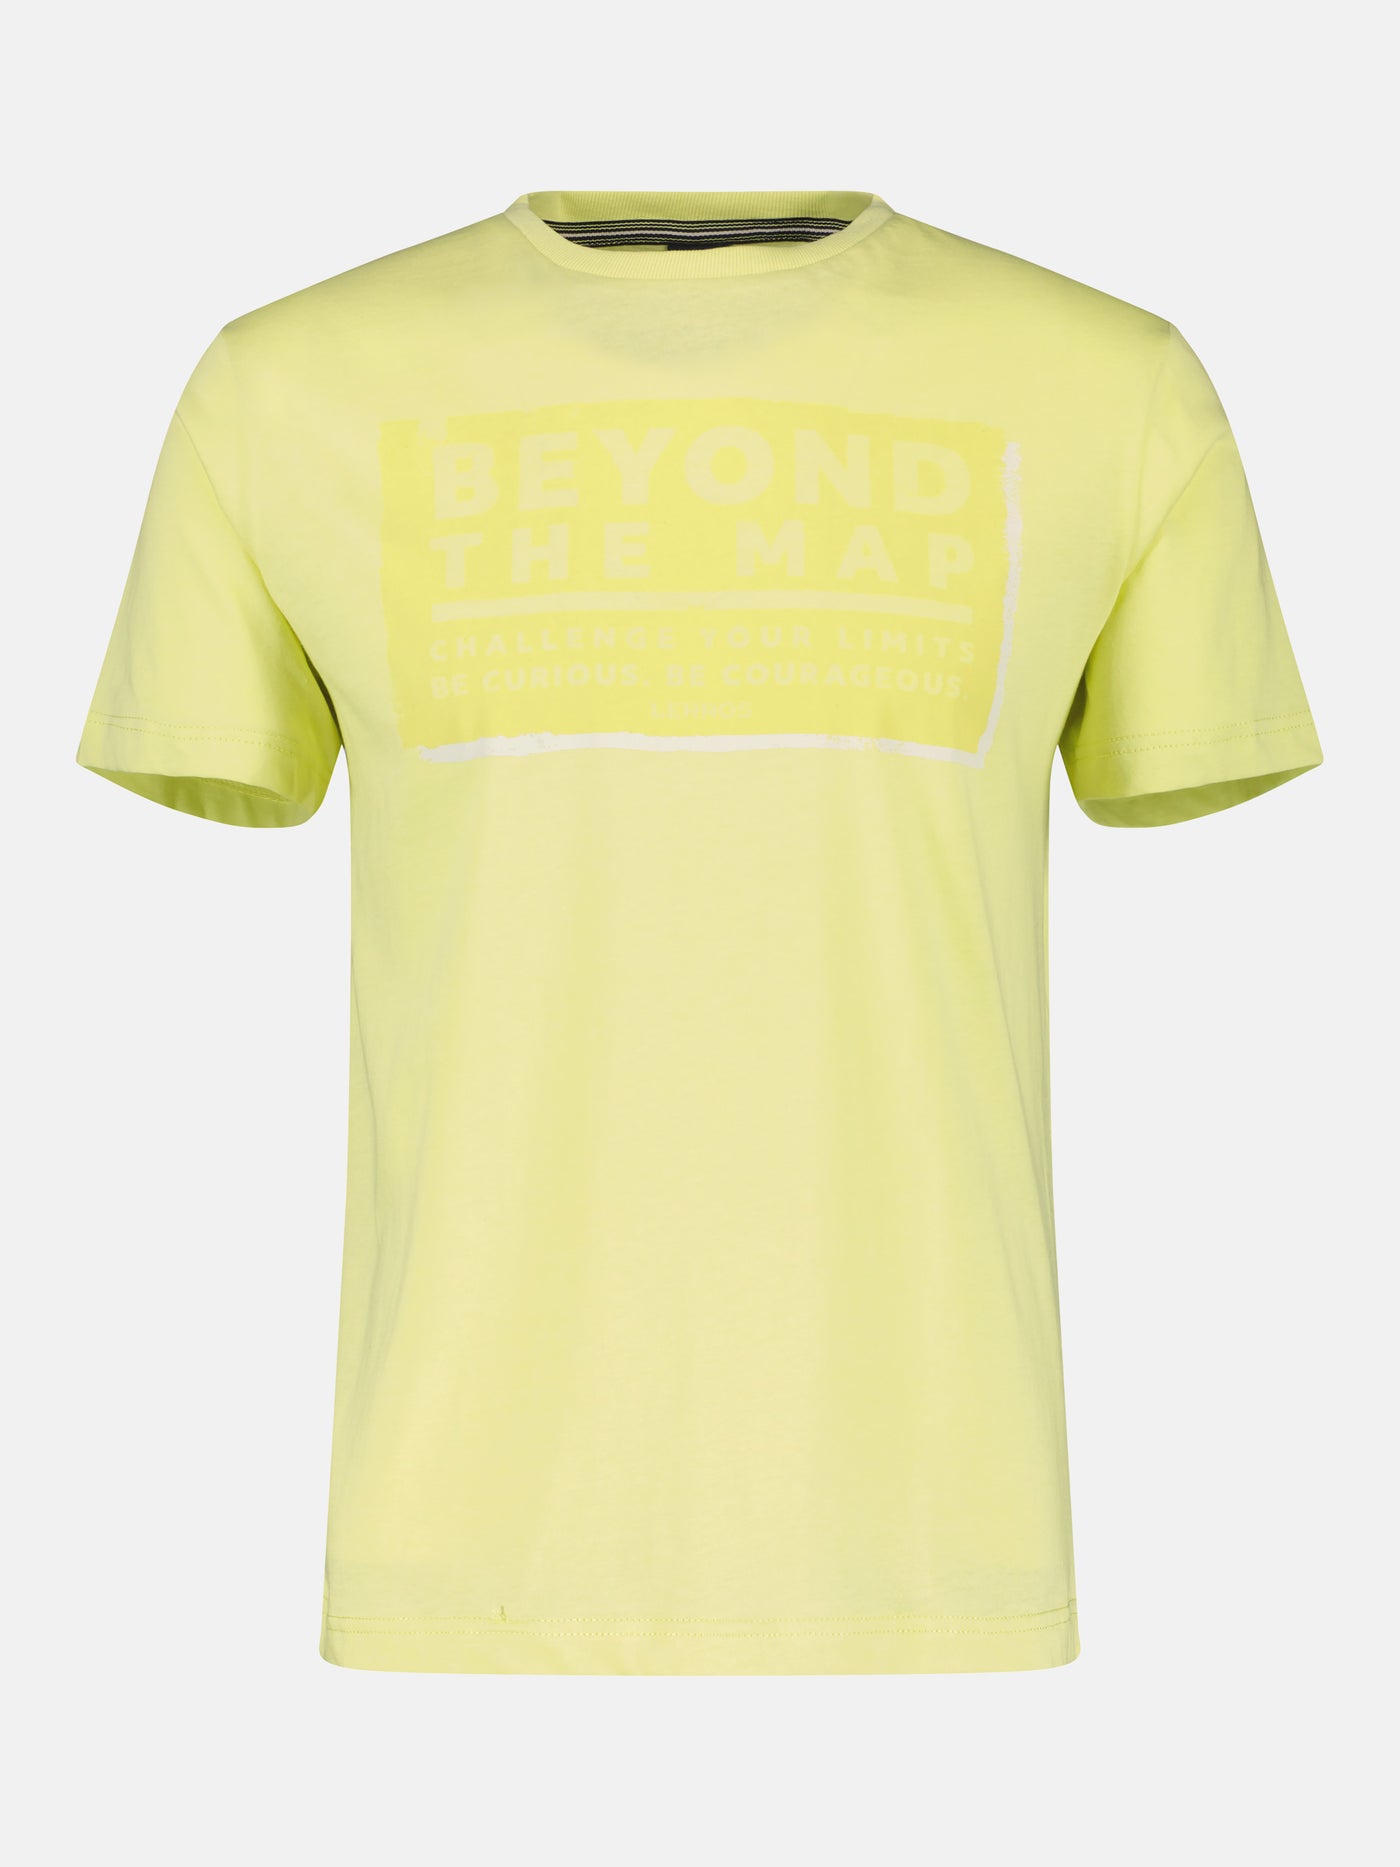 T-Shirt *Beyond the map*